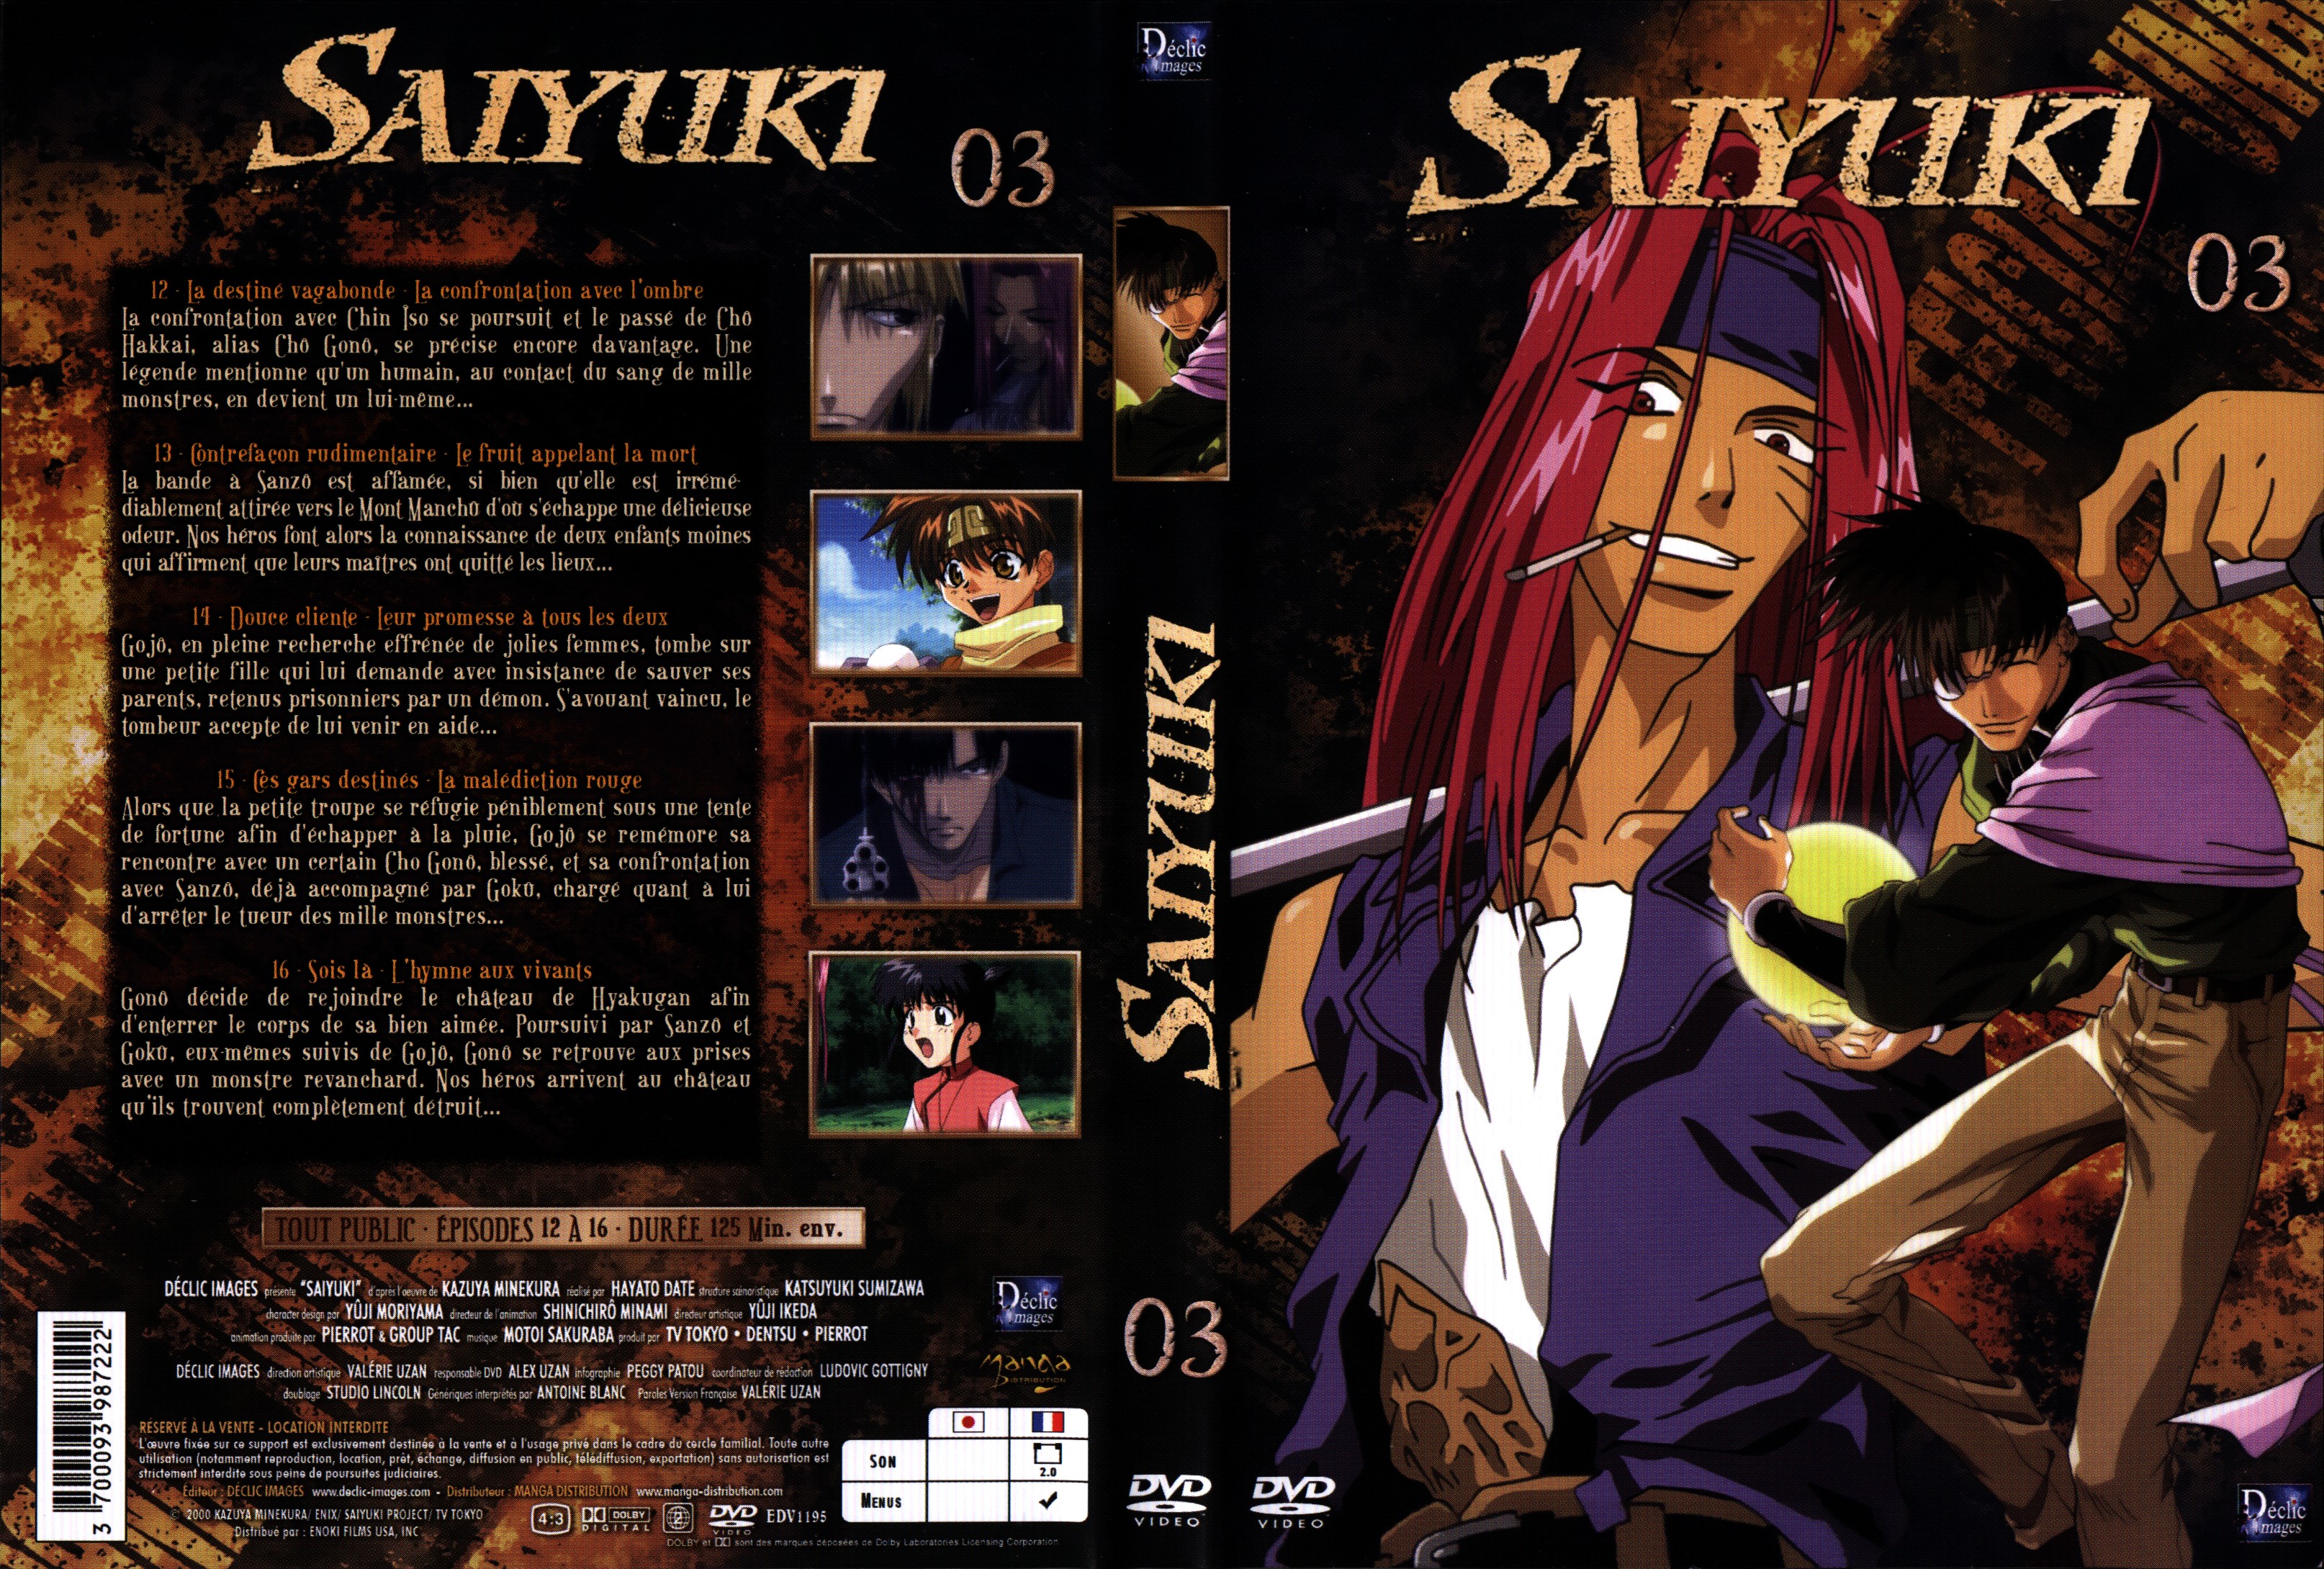 Jaquette DVD Saiyuki vol 03